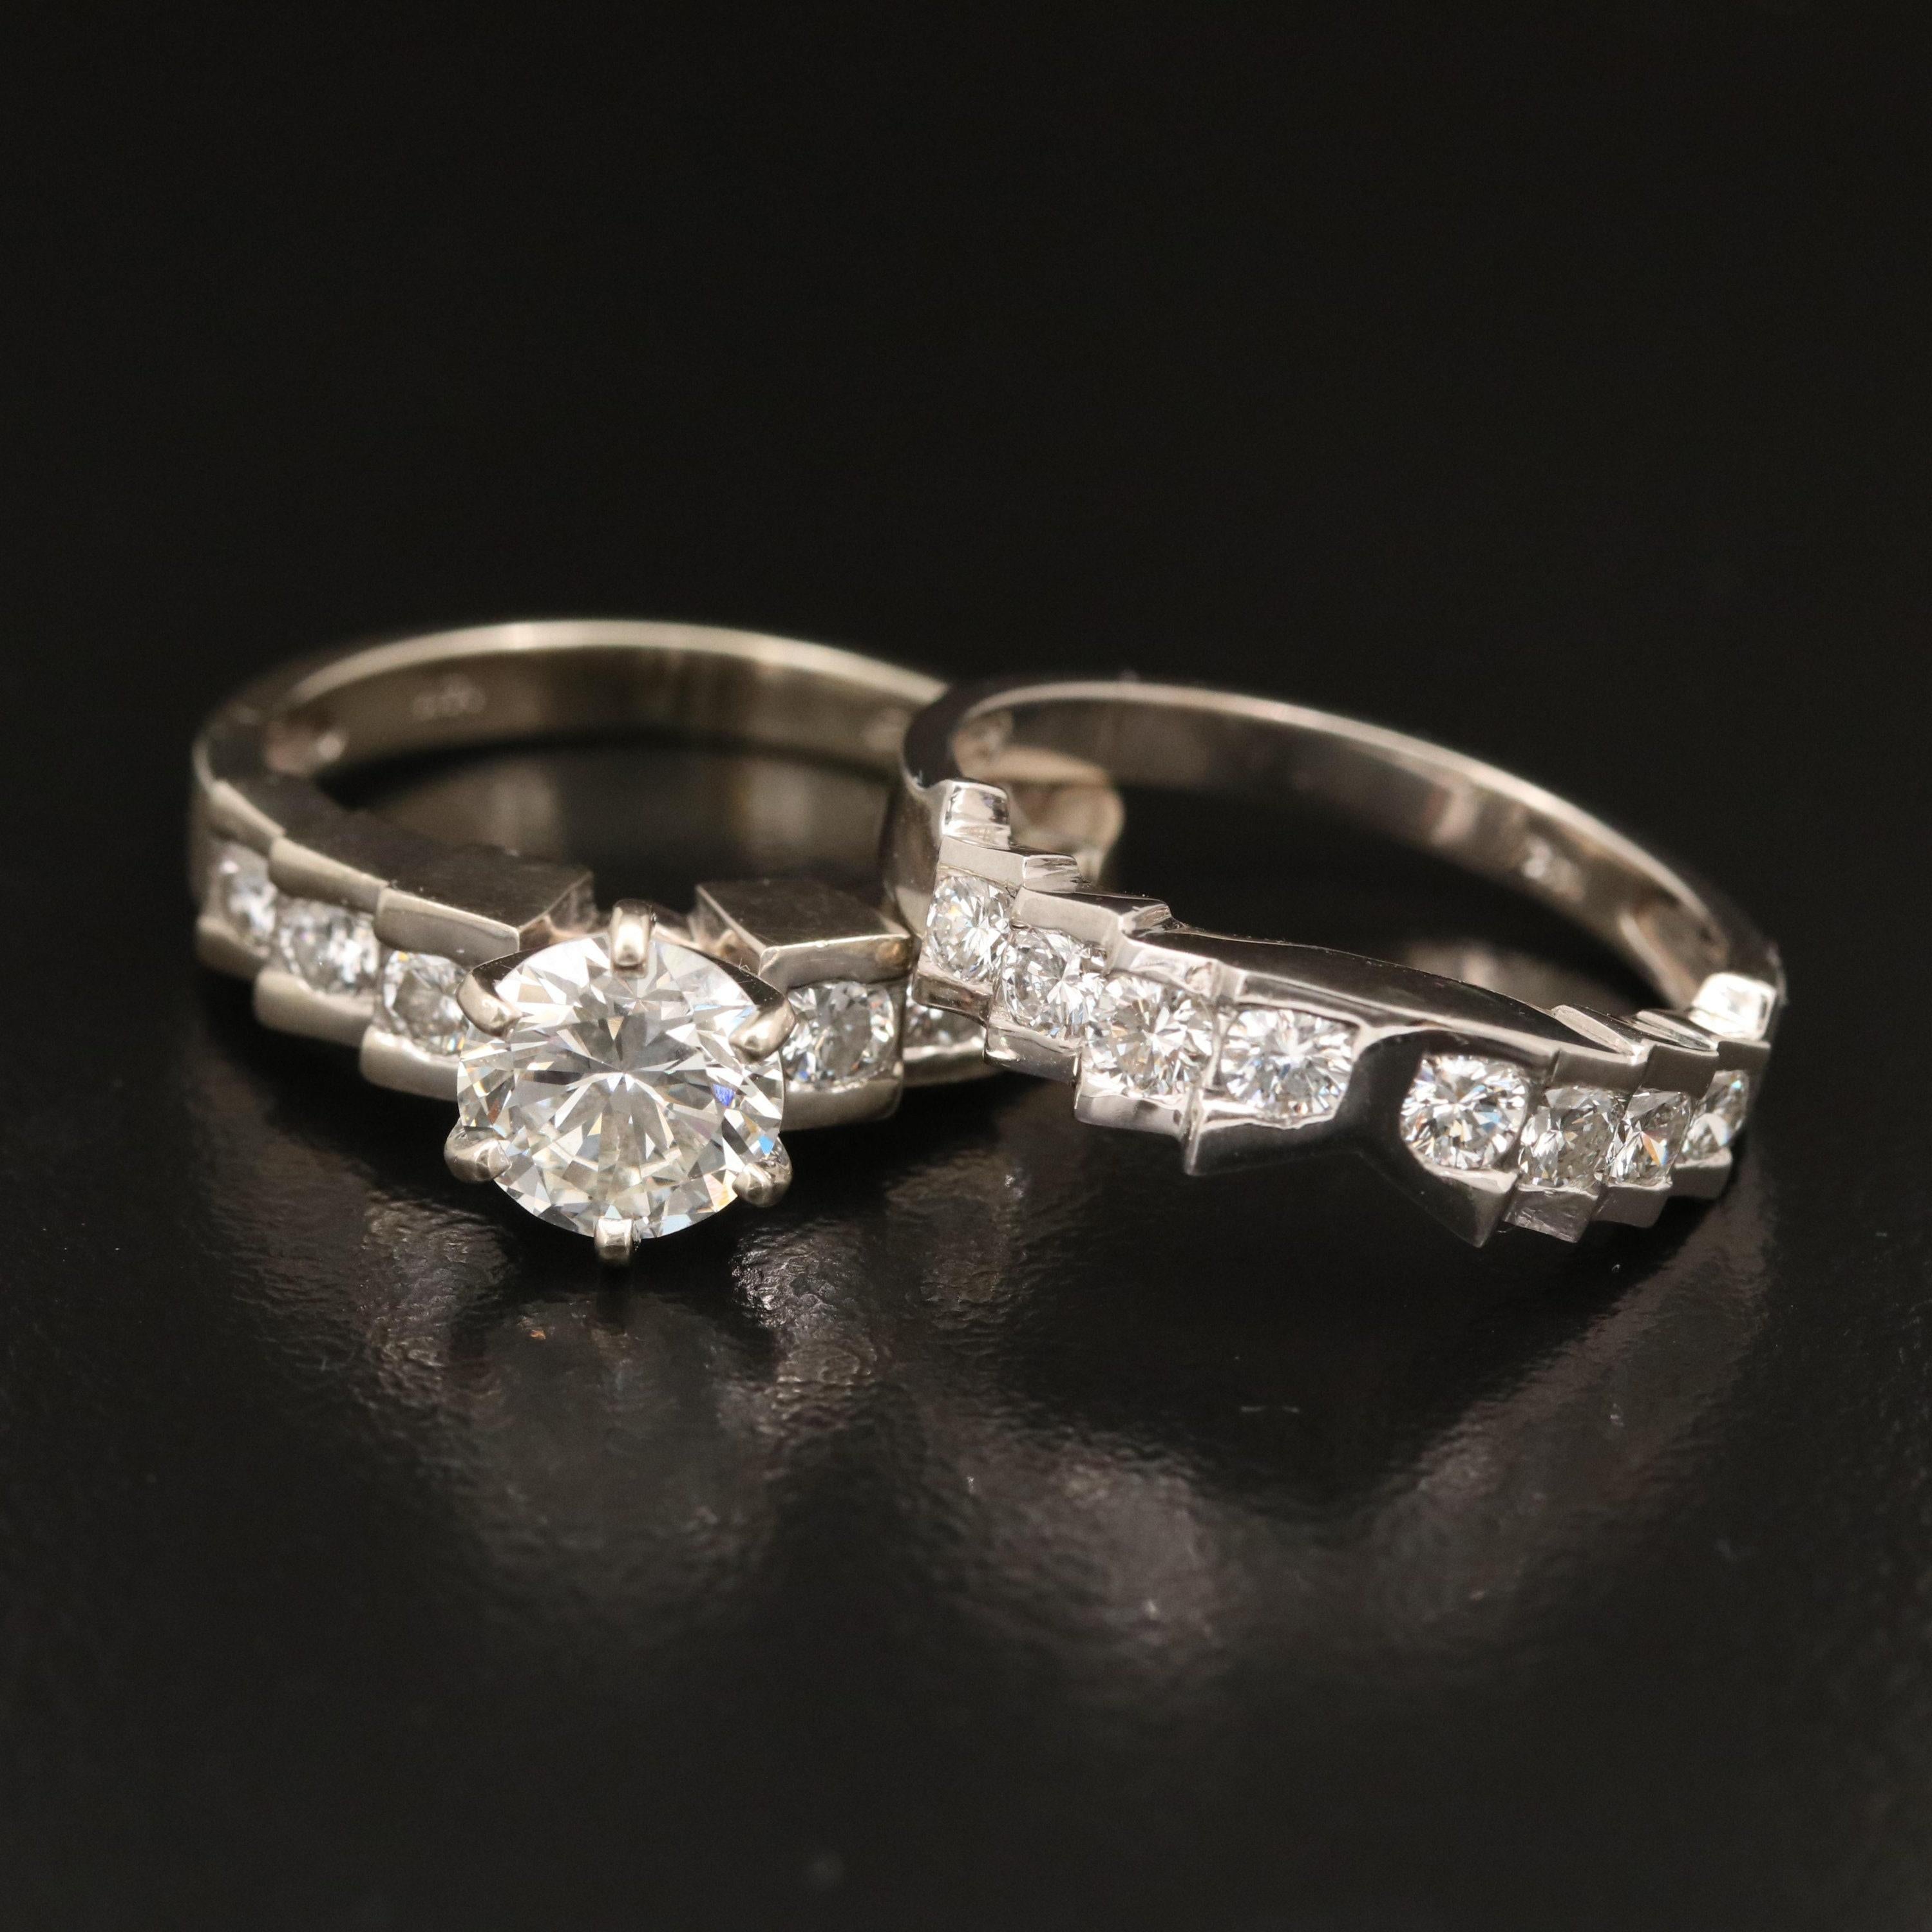 For Sale:  Natural 1.32 Carat Diamond White Gold Bridal Engagement Ring Set Wedding Ring 2